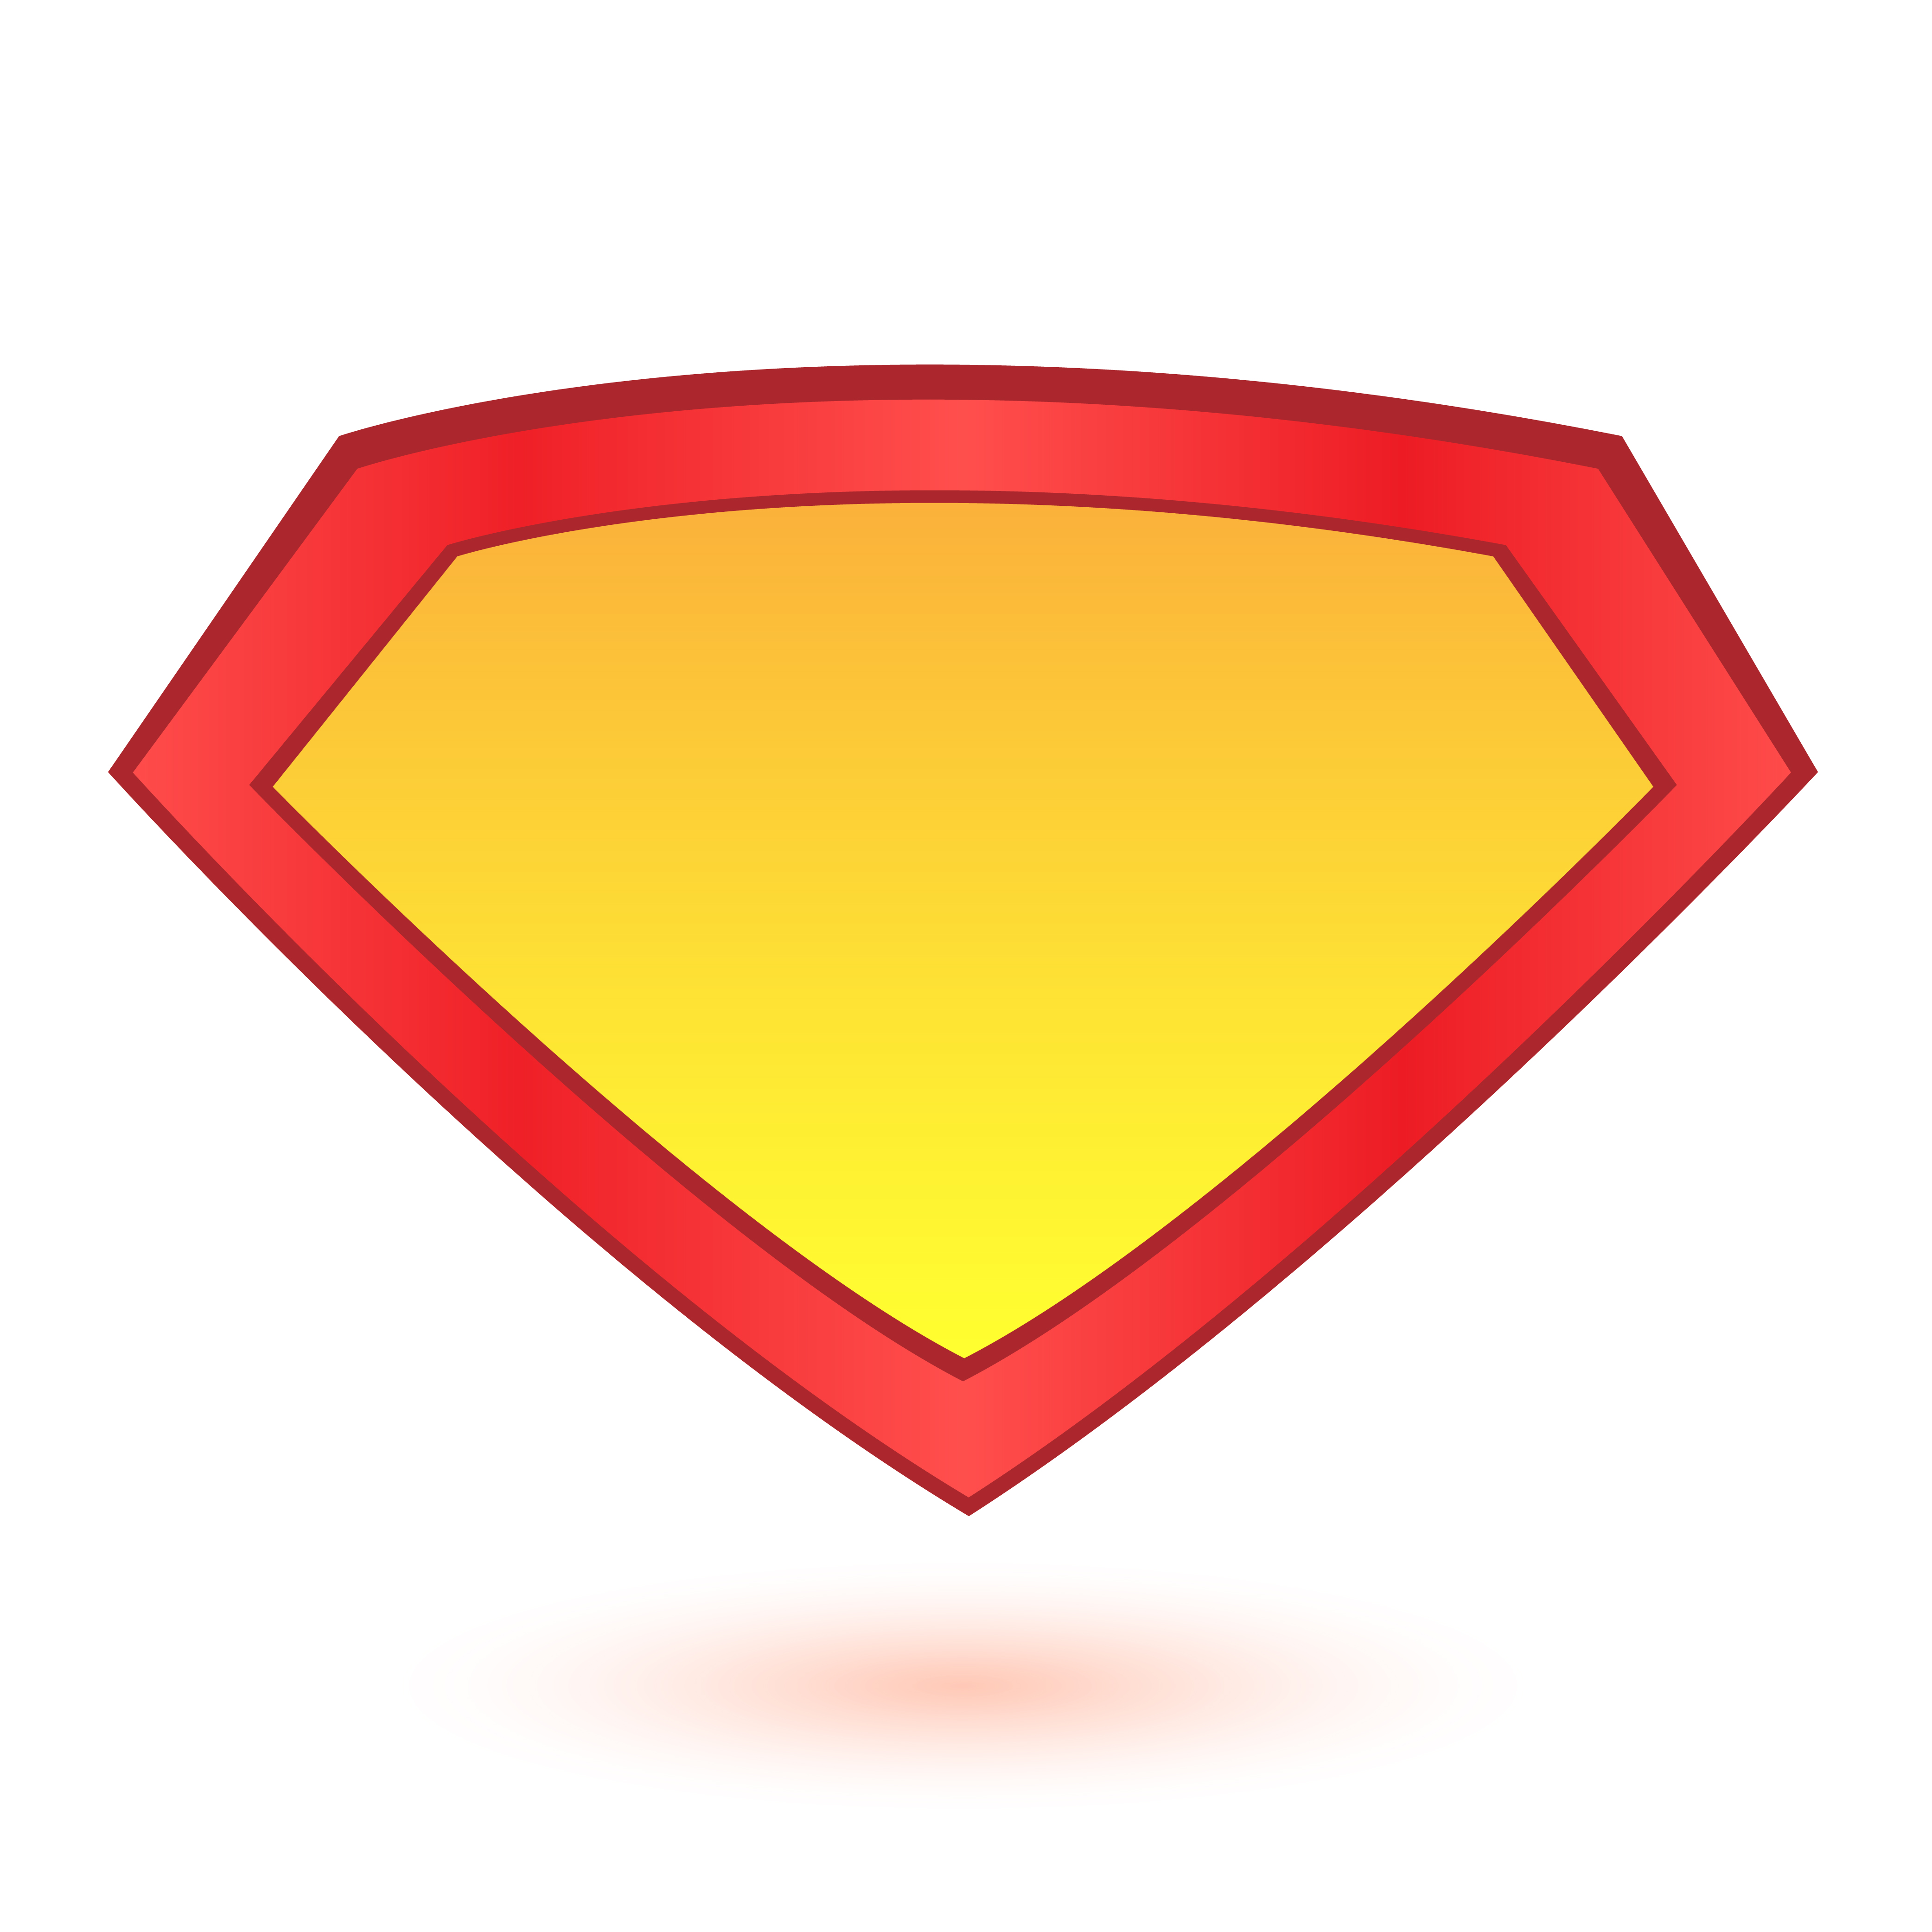 Superhero logo template Download Free Vectors, Clipart Graphics